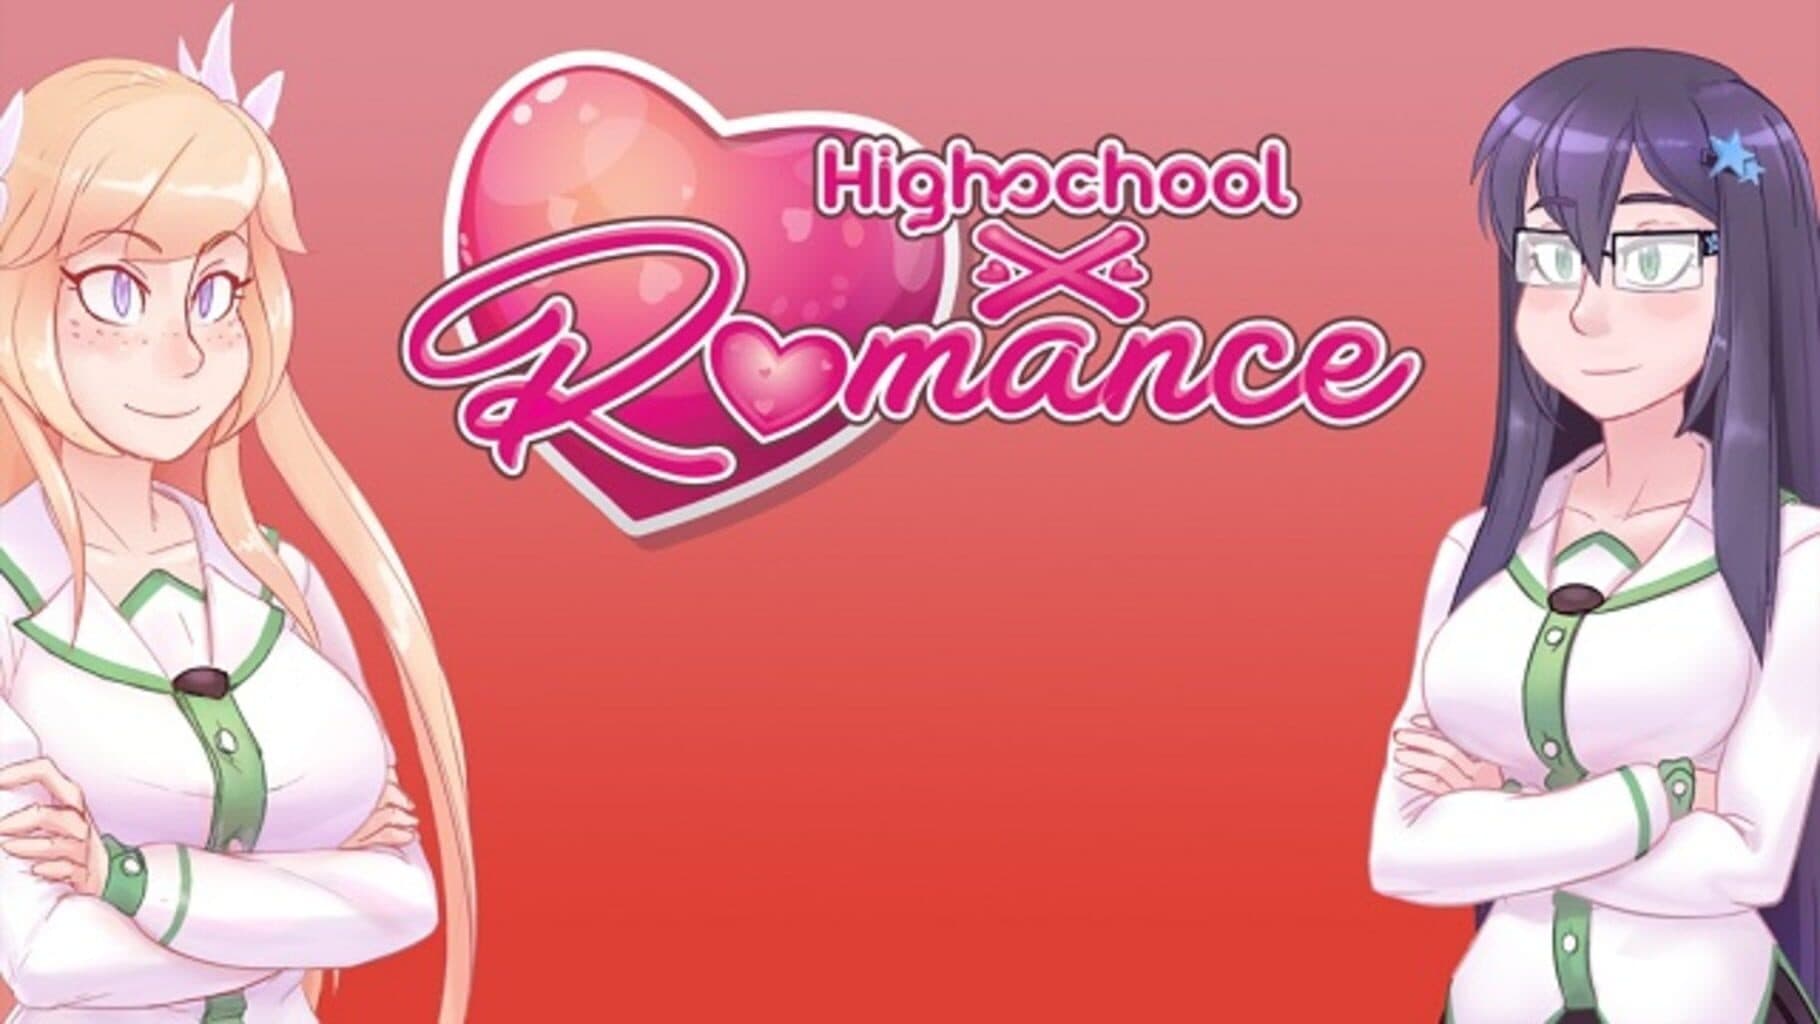 Highschool Romance Image